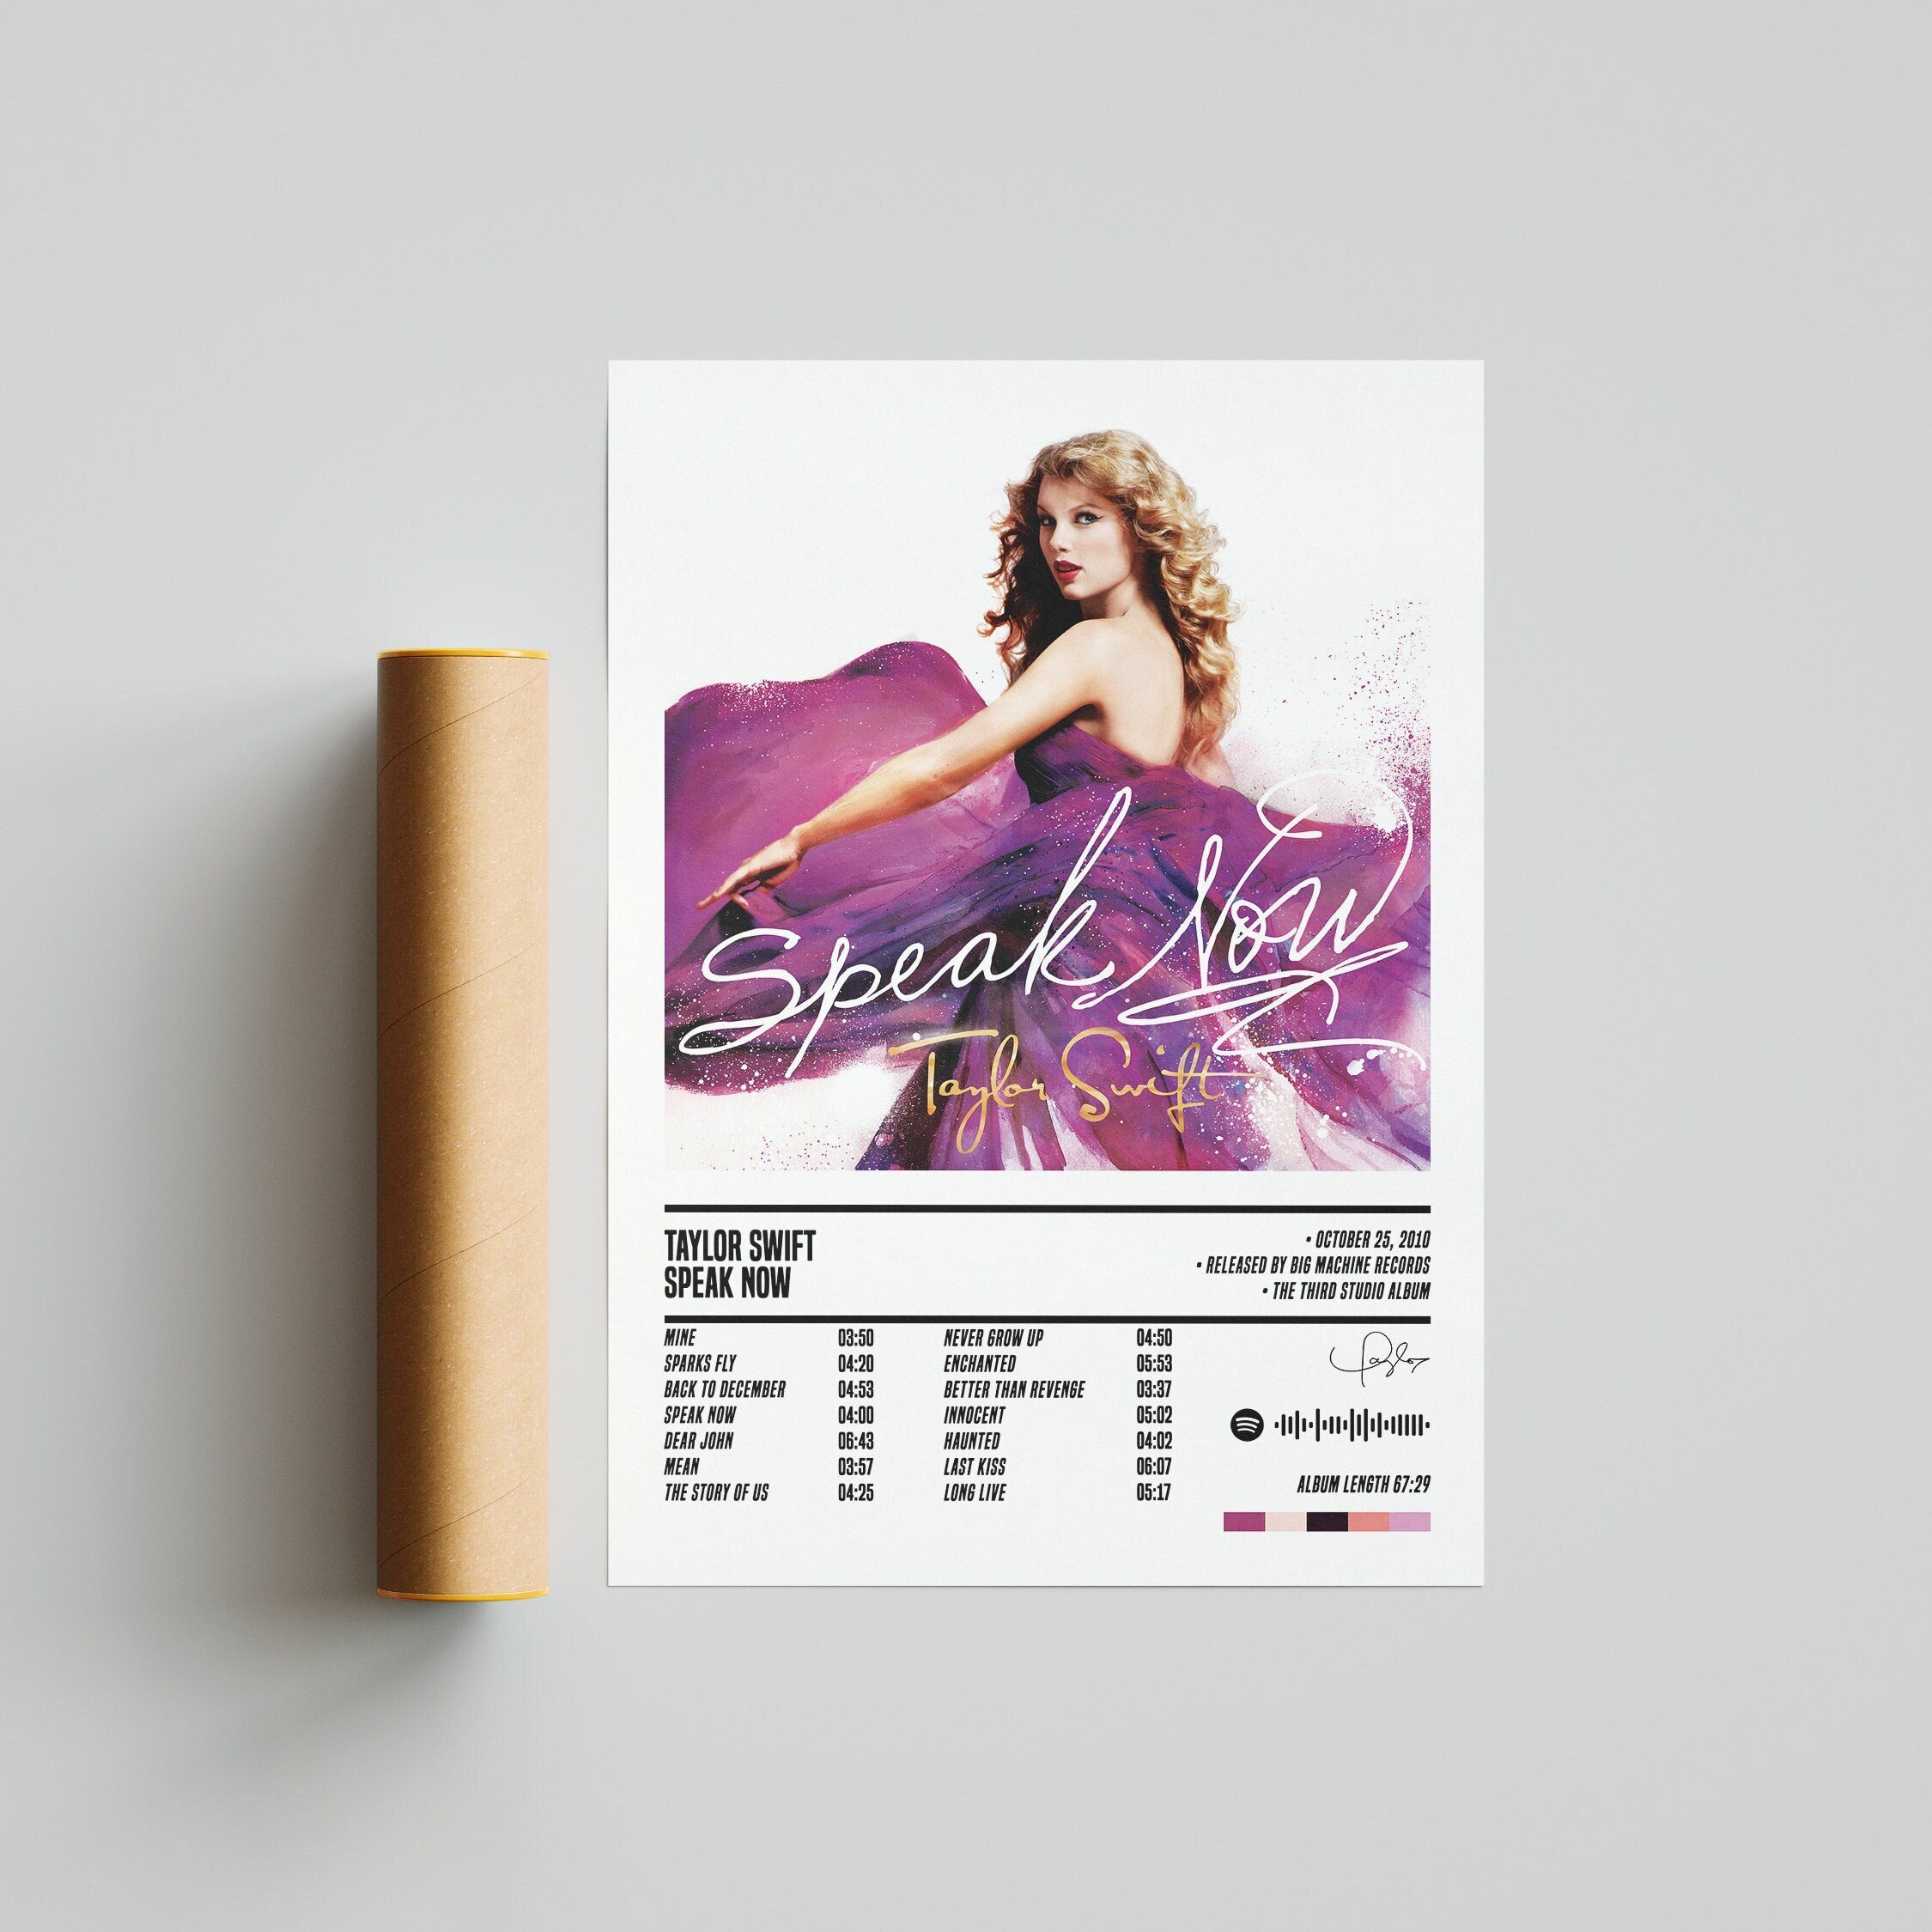 Taylor Swift Speak Now Minimalist Album Cover Poster